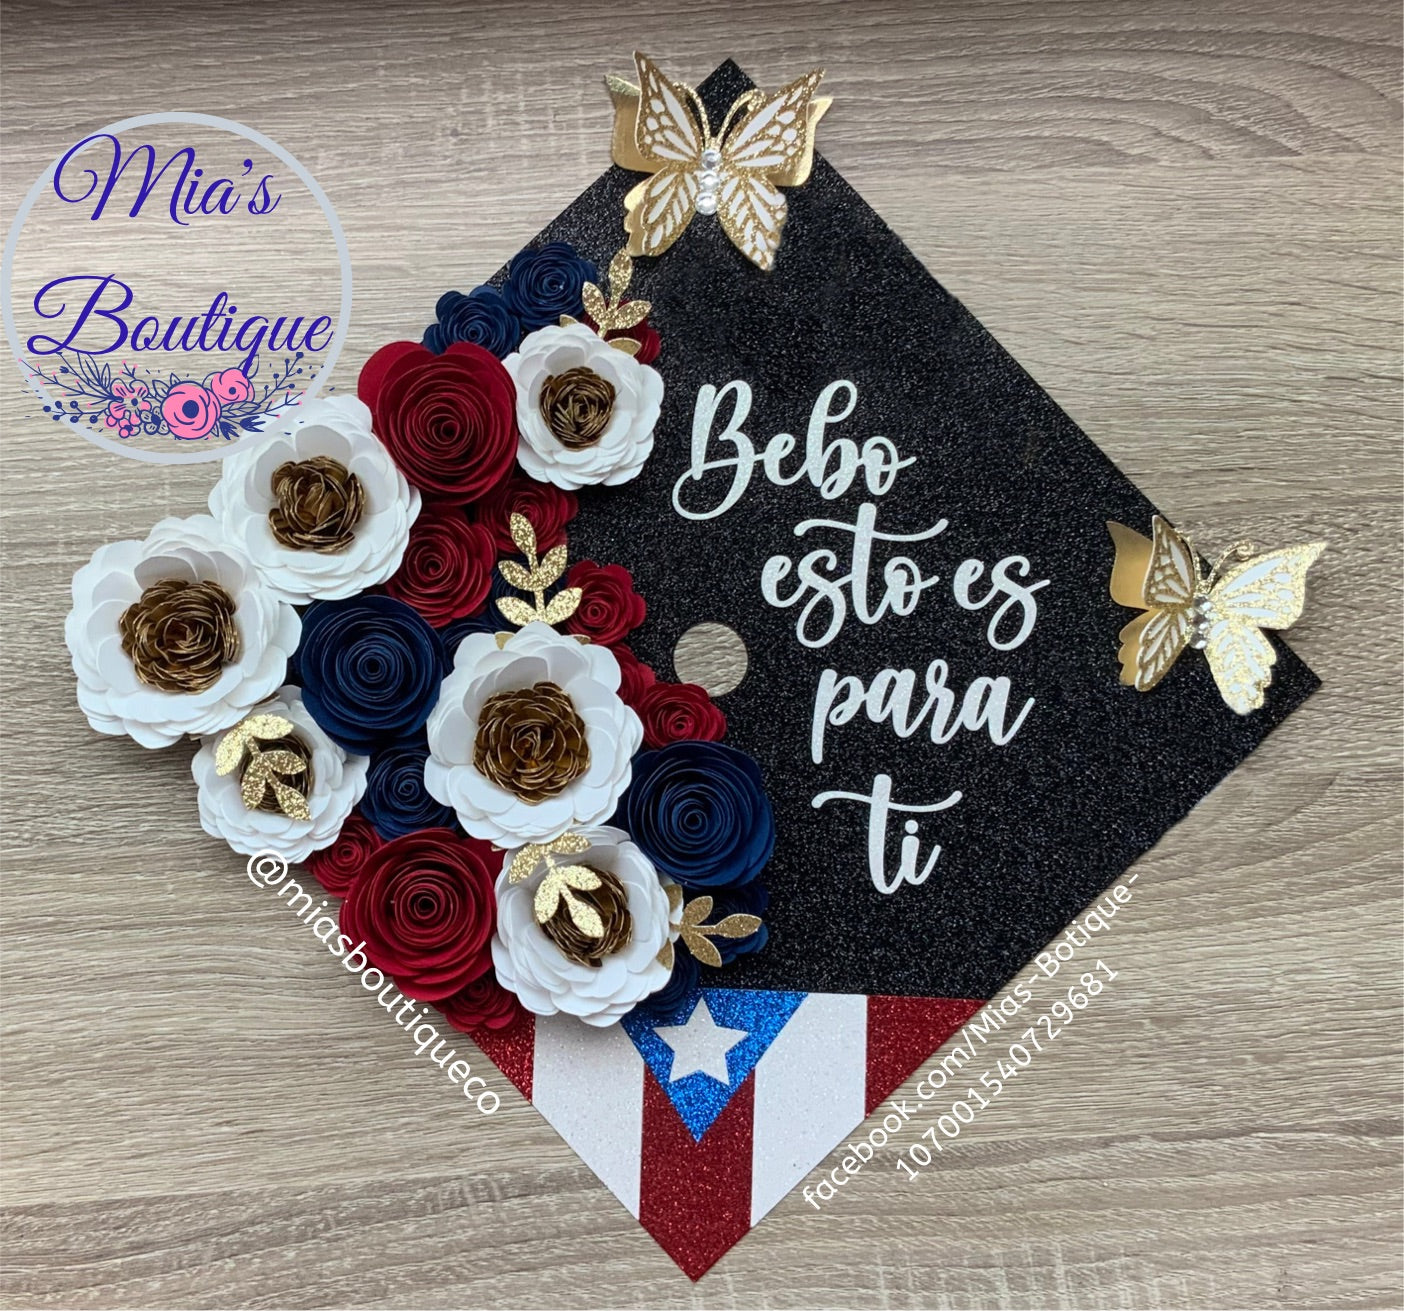 Puerto Rico Graduation Cap cover